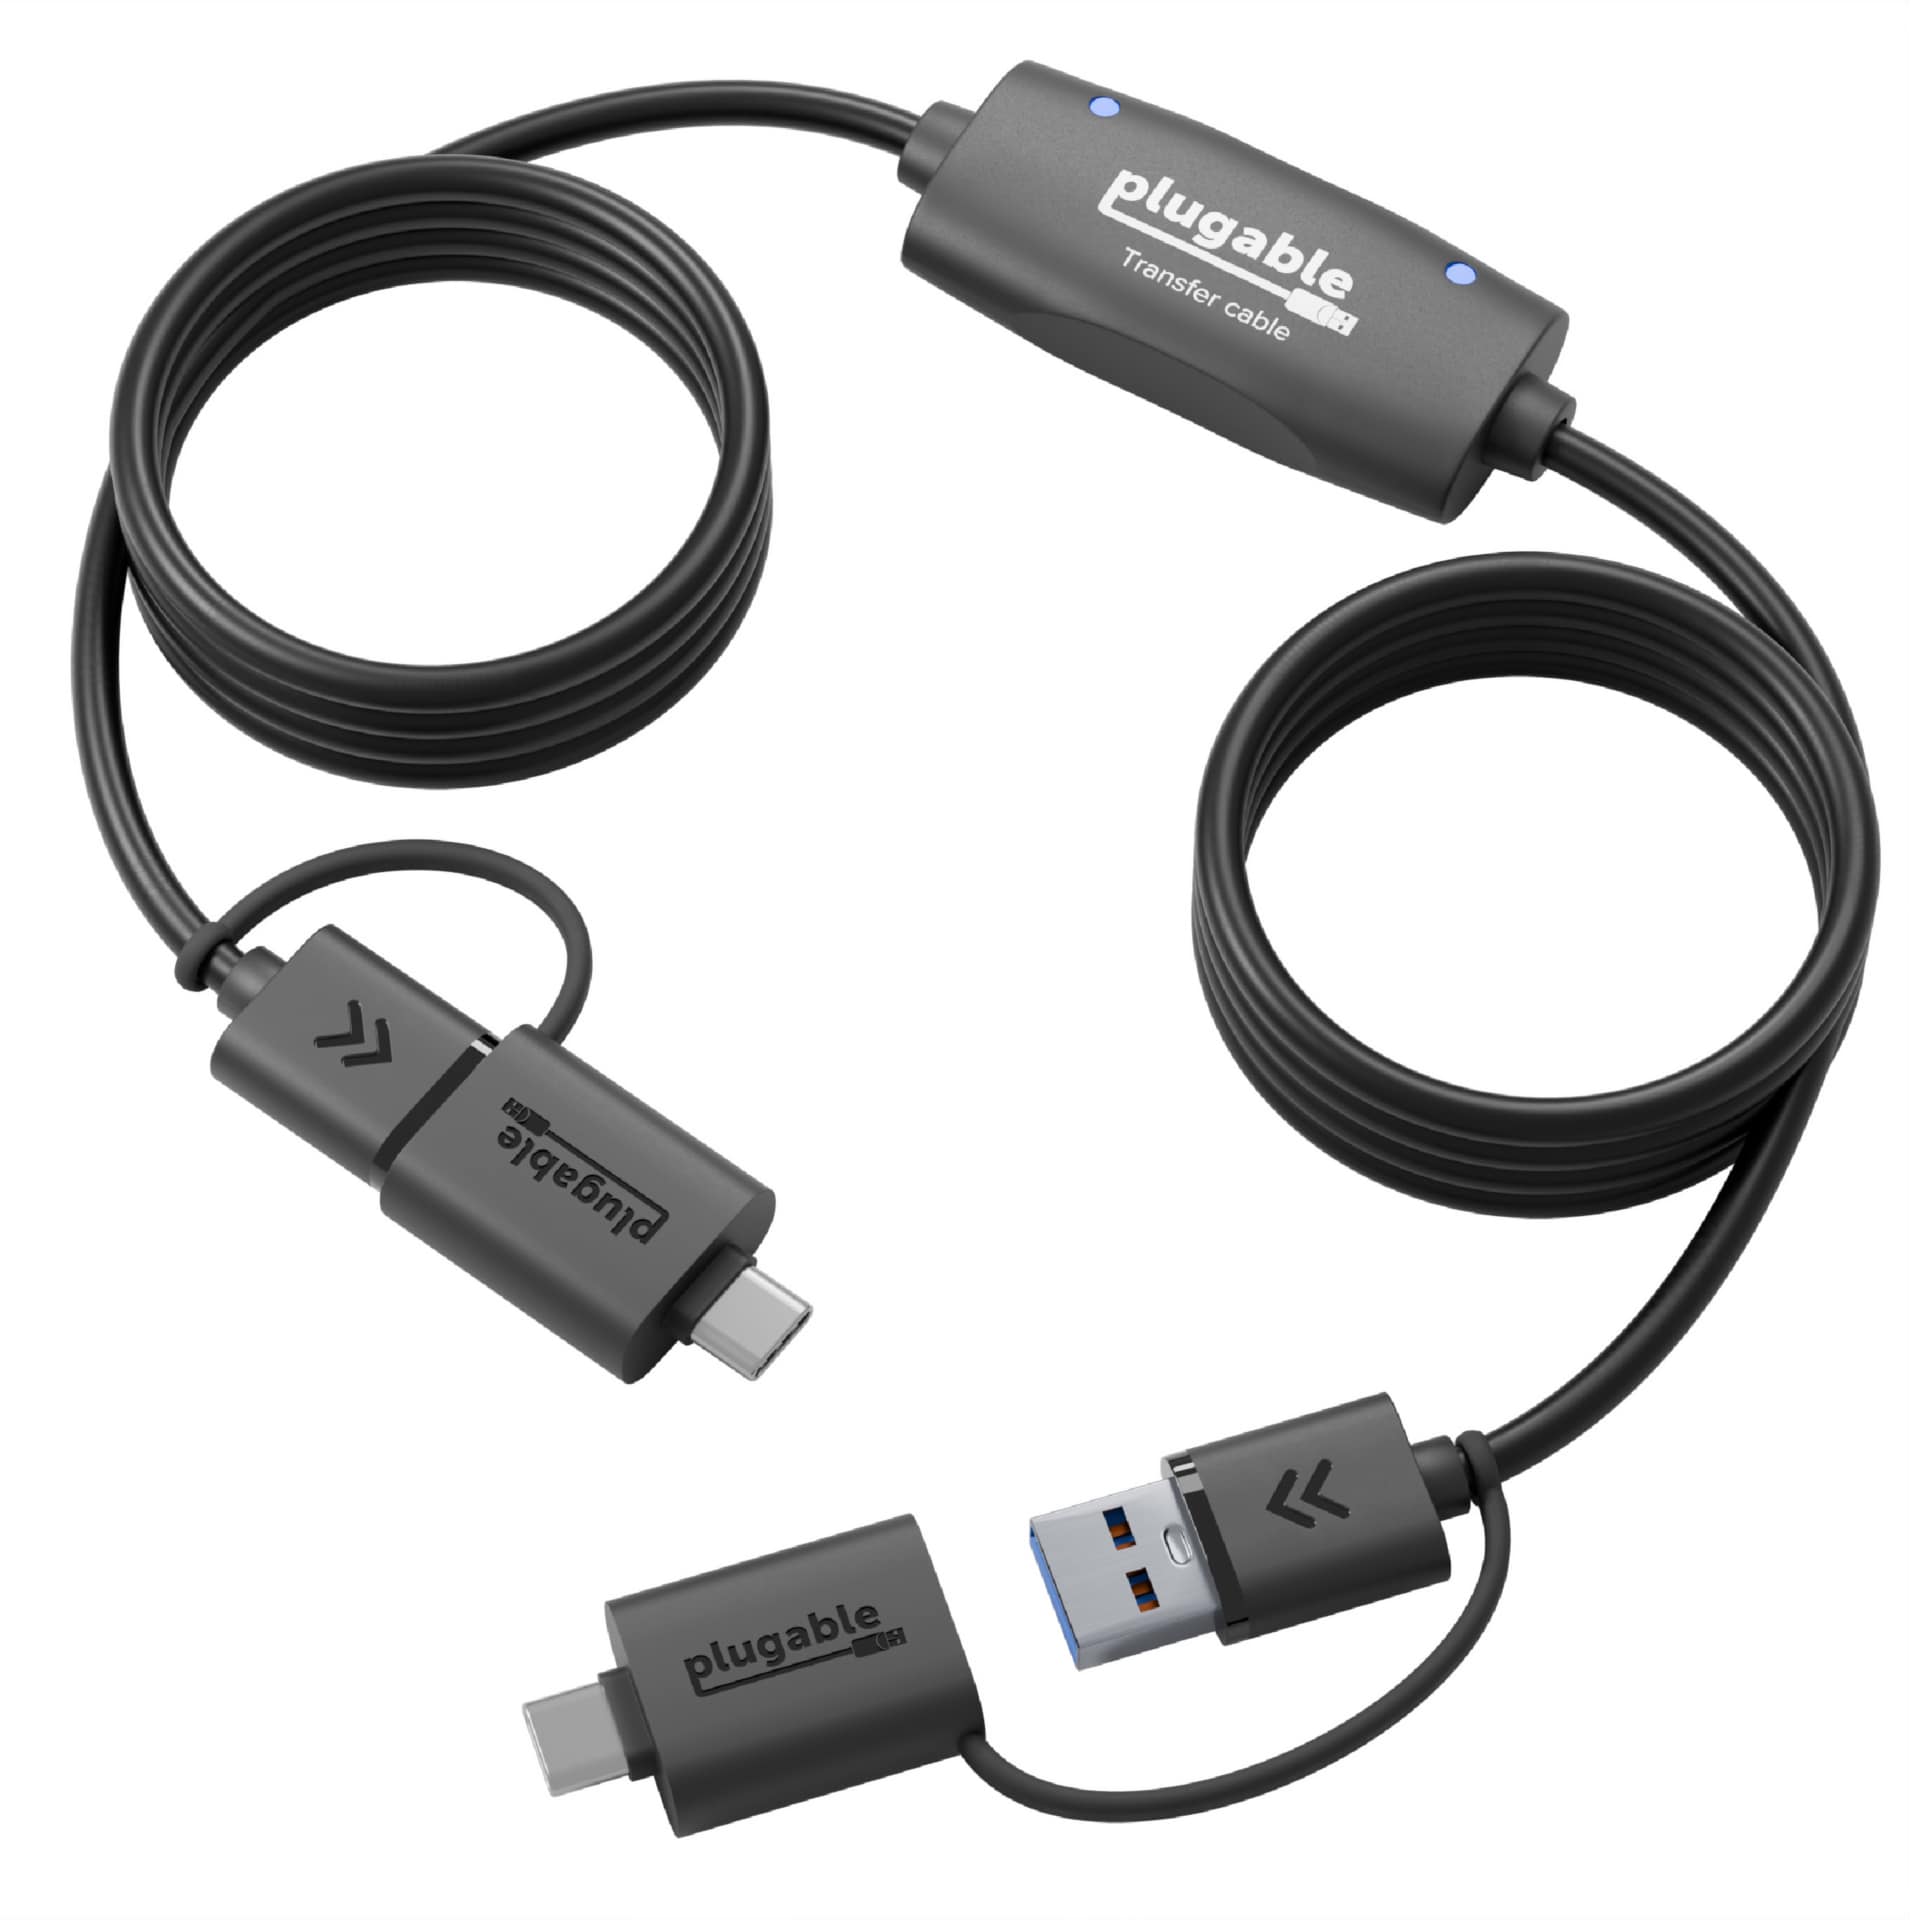 Plugable USB 3.0 Transfer Cable, Transfer Data Between 2 Windows PC's, Brav